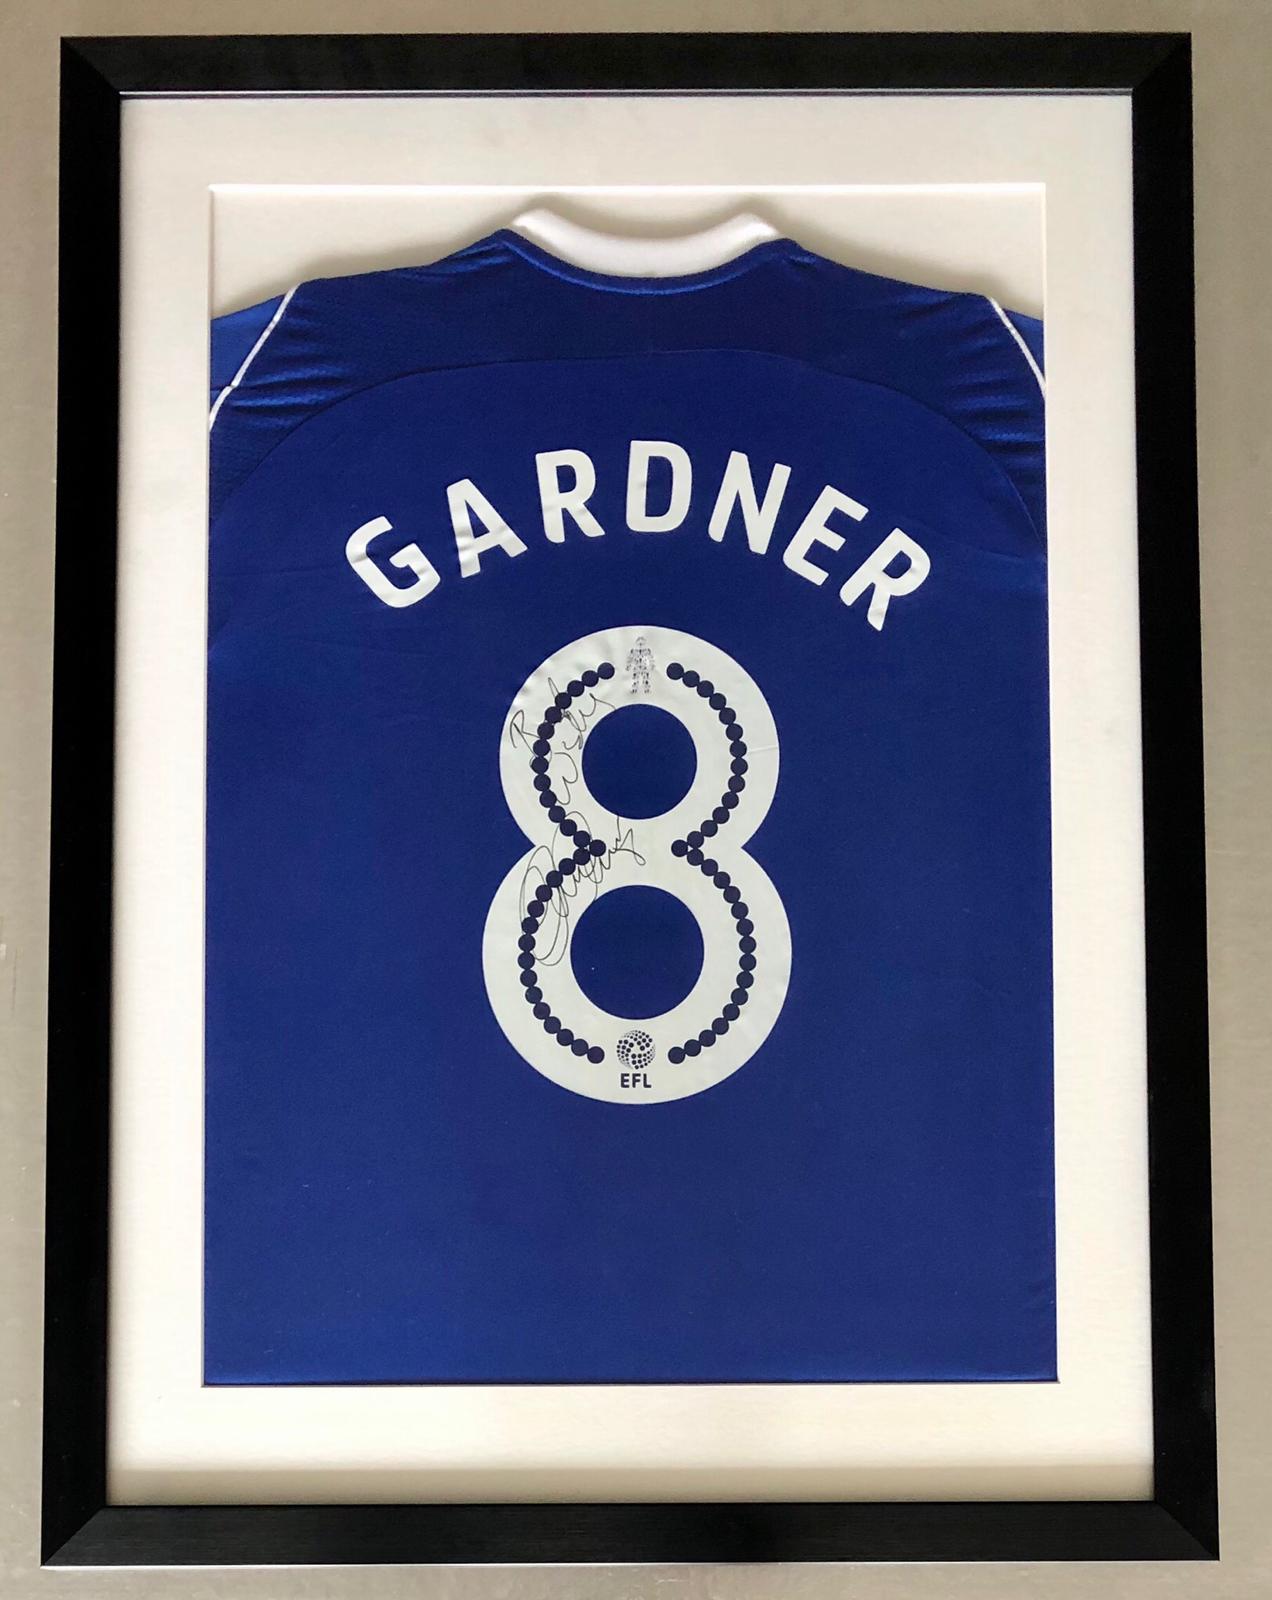 Craig Gardner Signed Birmingham Shirt Framed